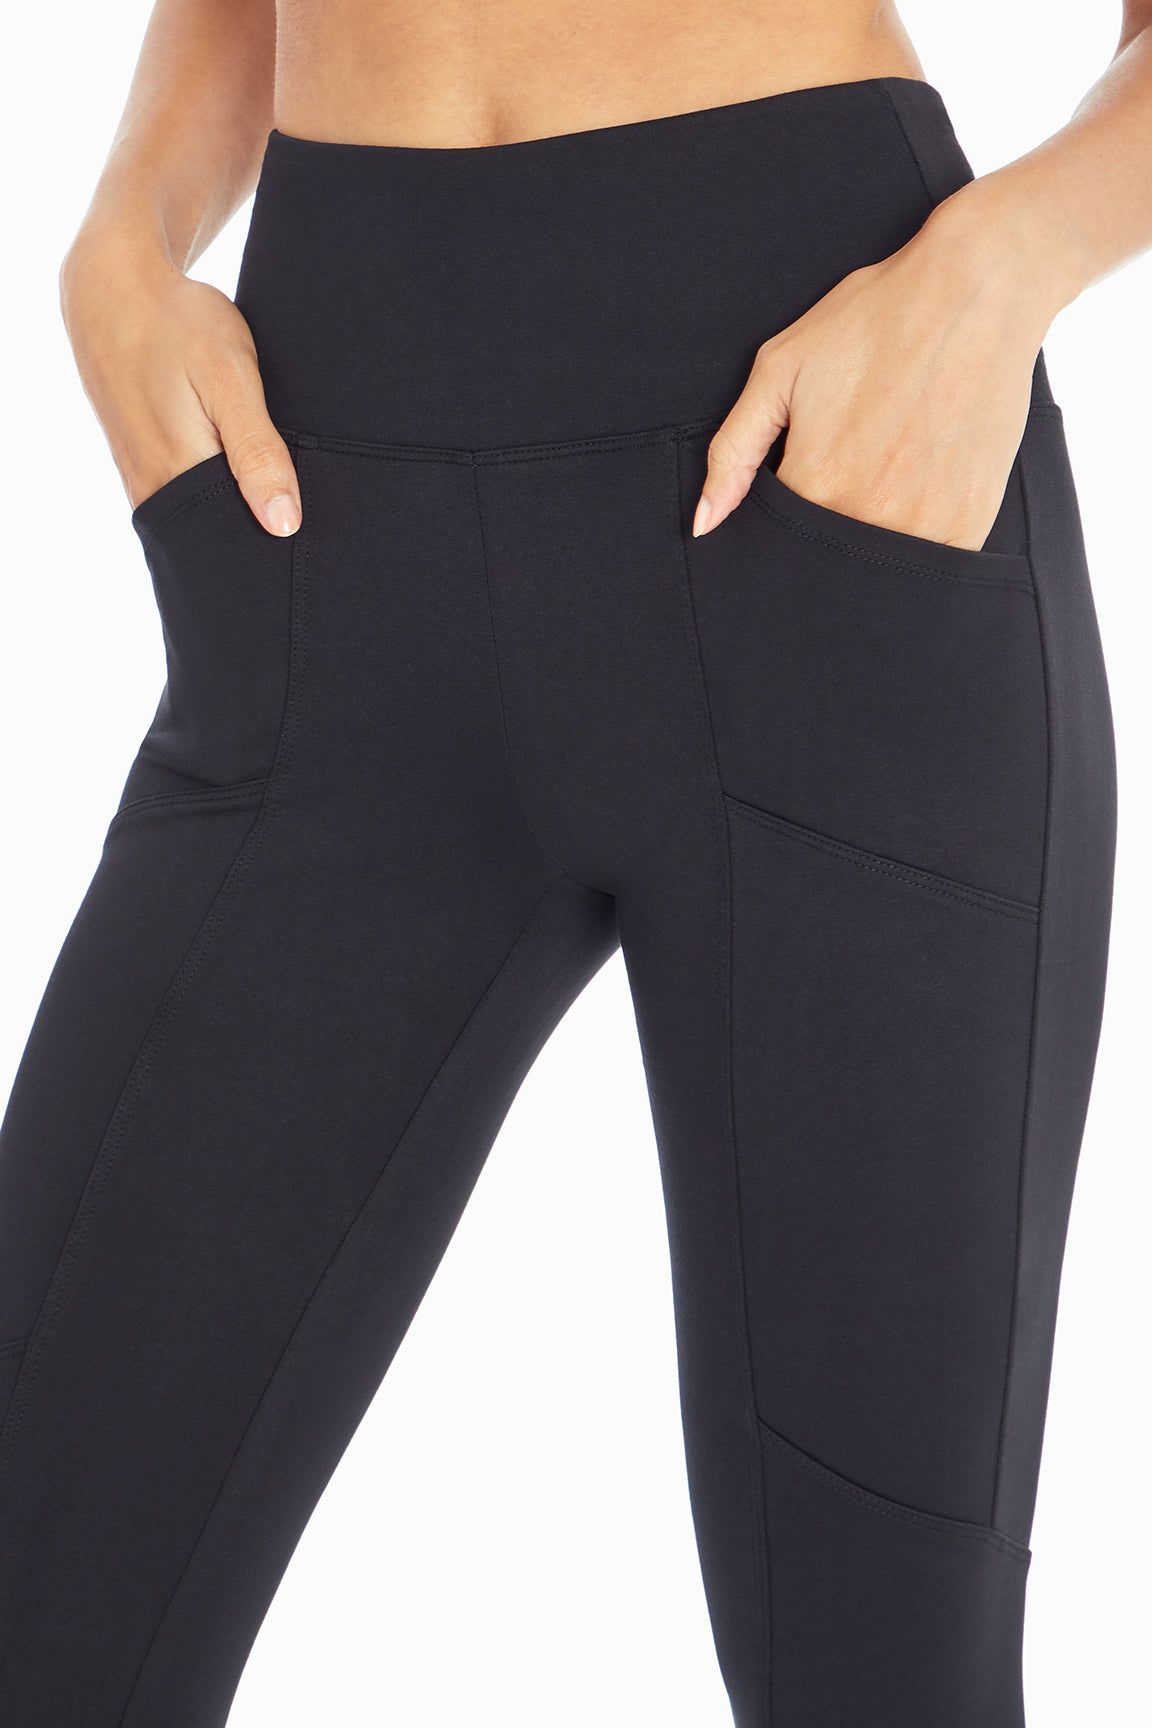 Marika Women's Standard Jenni High Rise Tummy Control Pocket Legging,  Black, Medium : Clothing, Shoes & Jewelry 